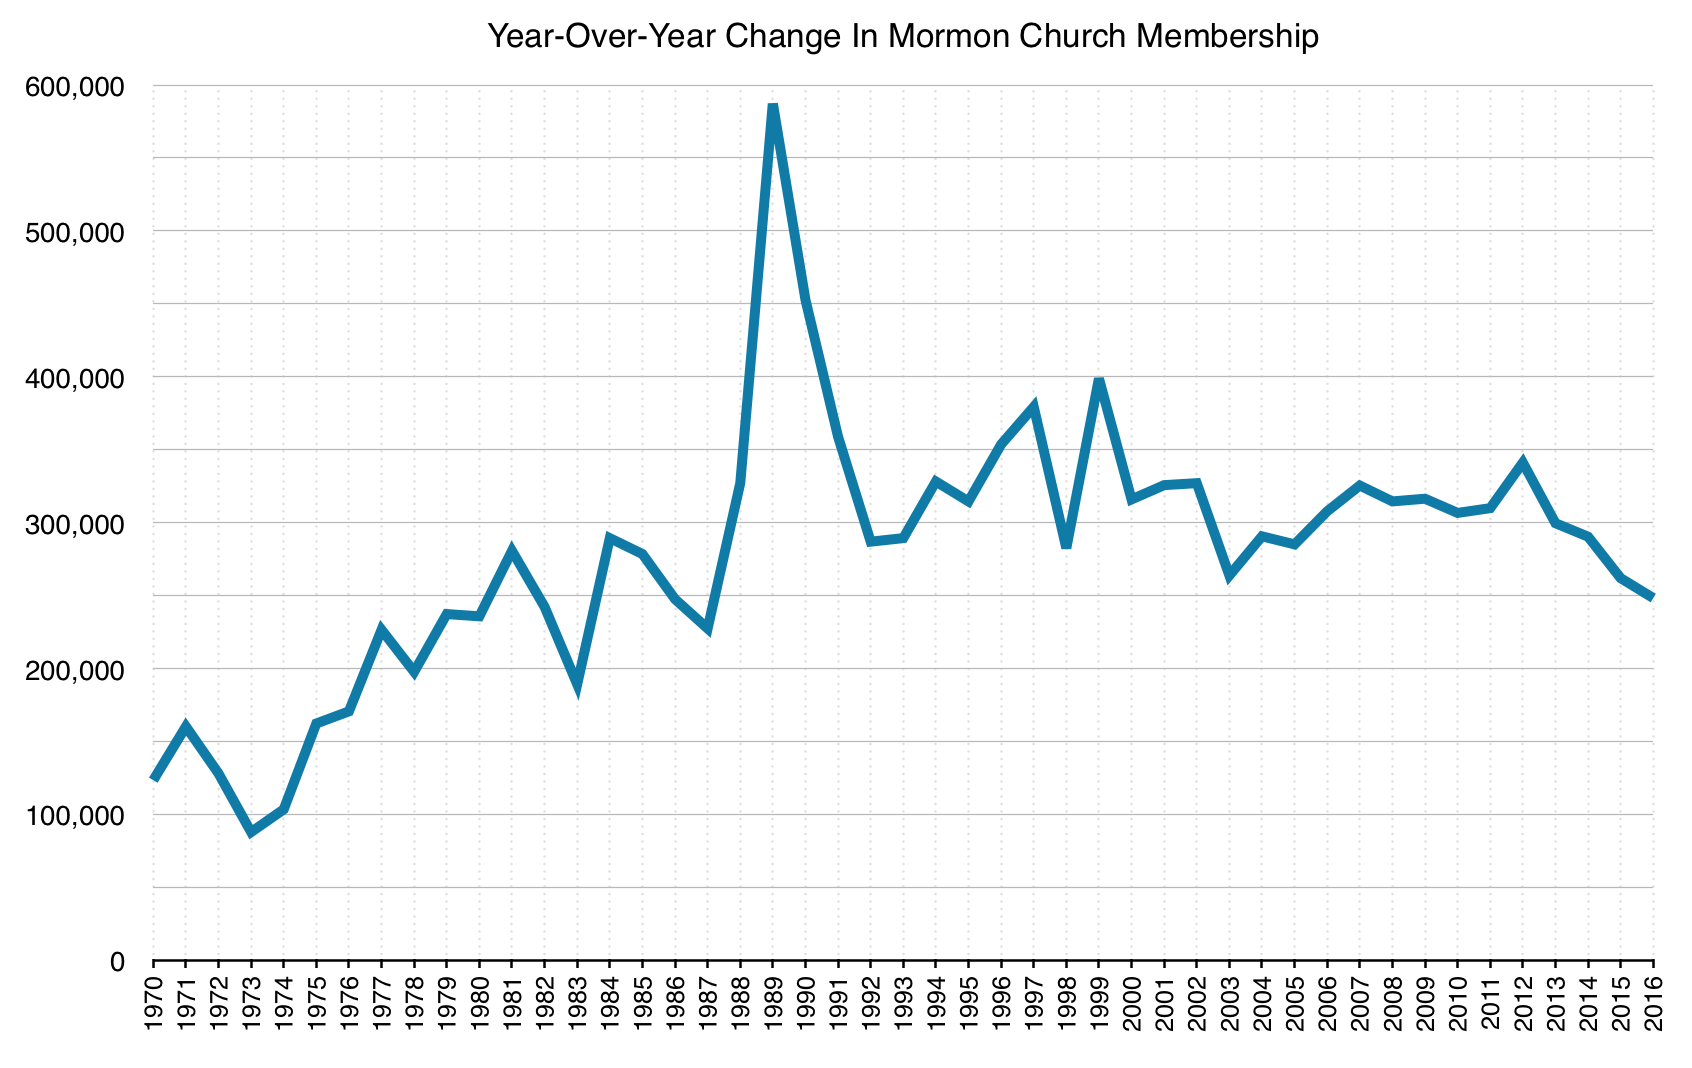 Year-Over-Year Change in Church Membership